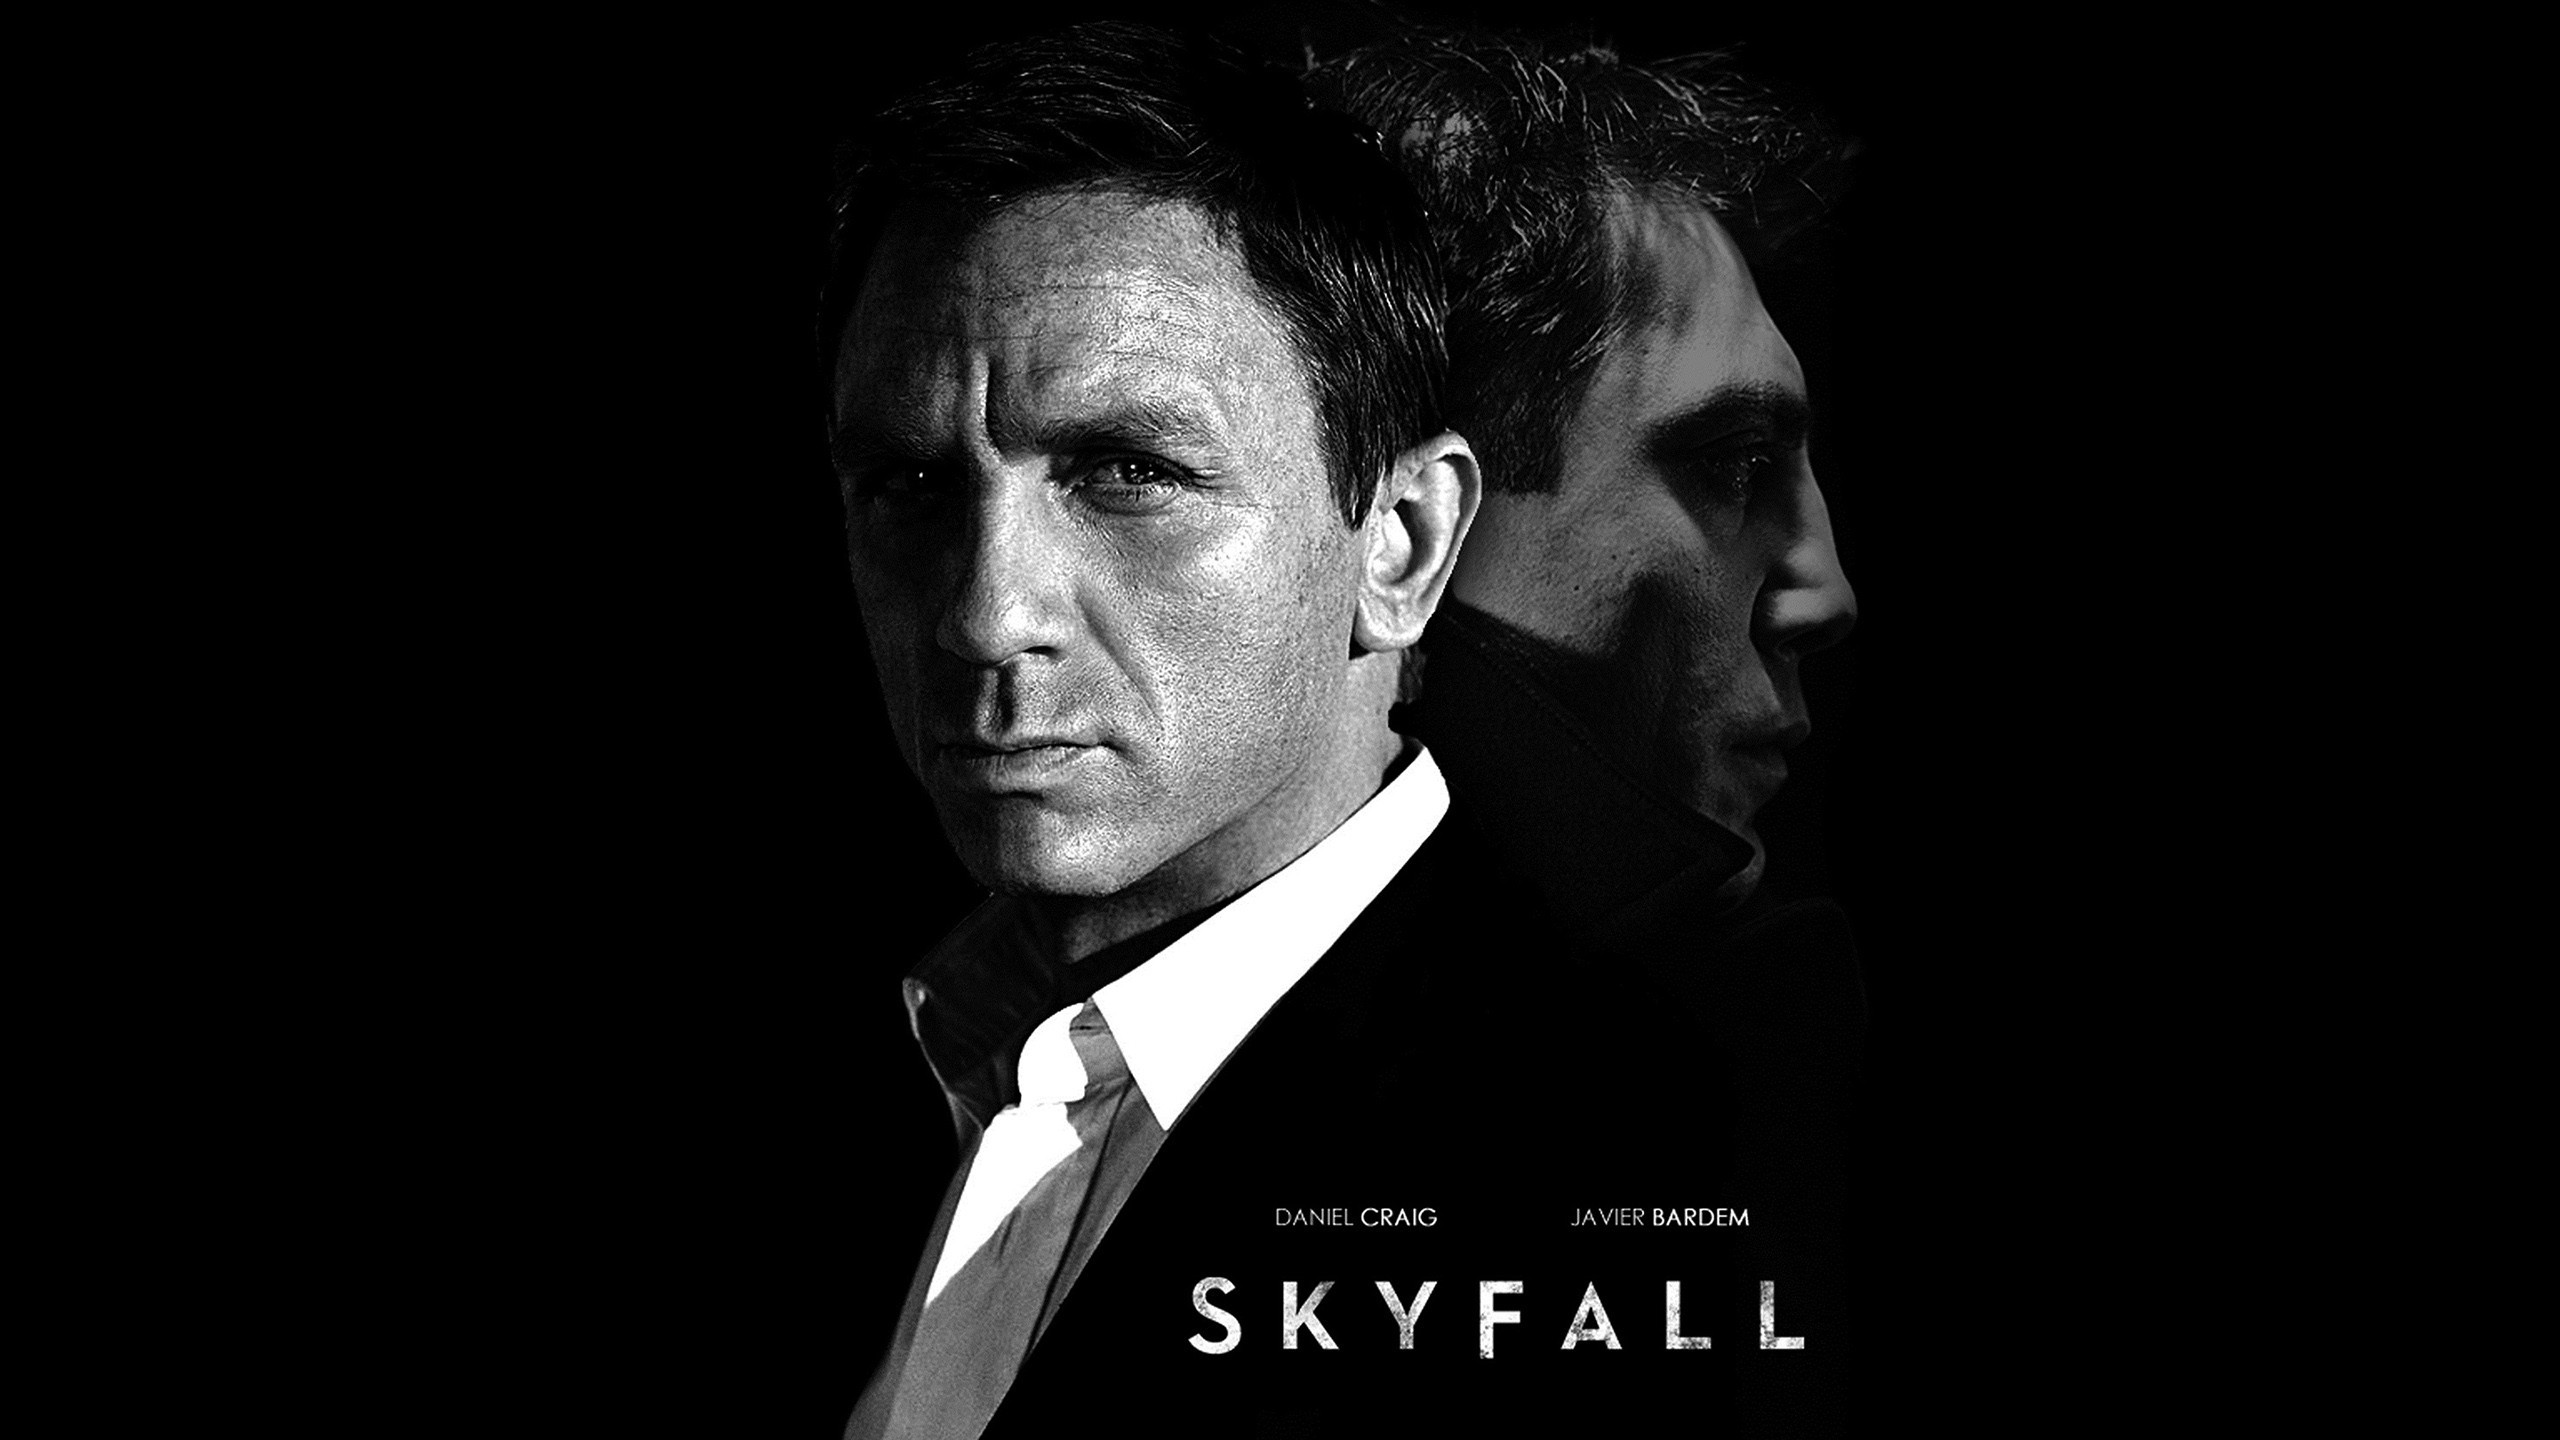 Movies James Bond Daniel Craig Javier Bardem Skyfall